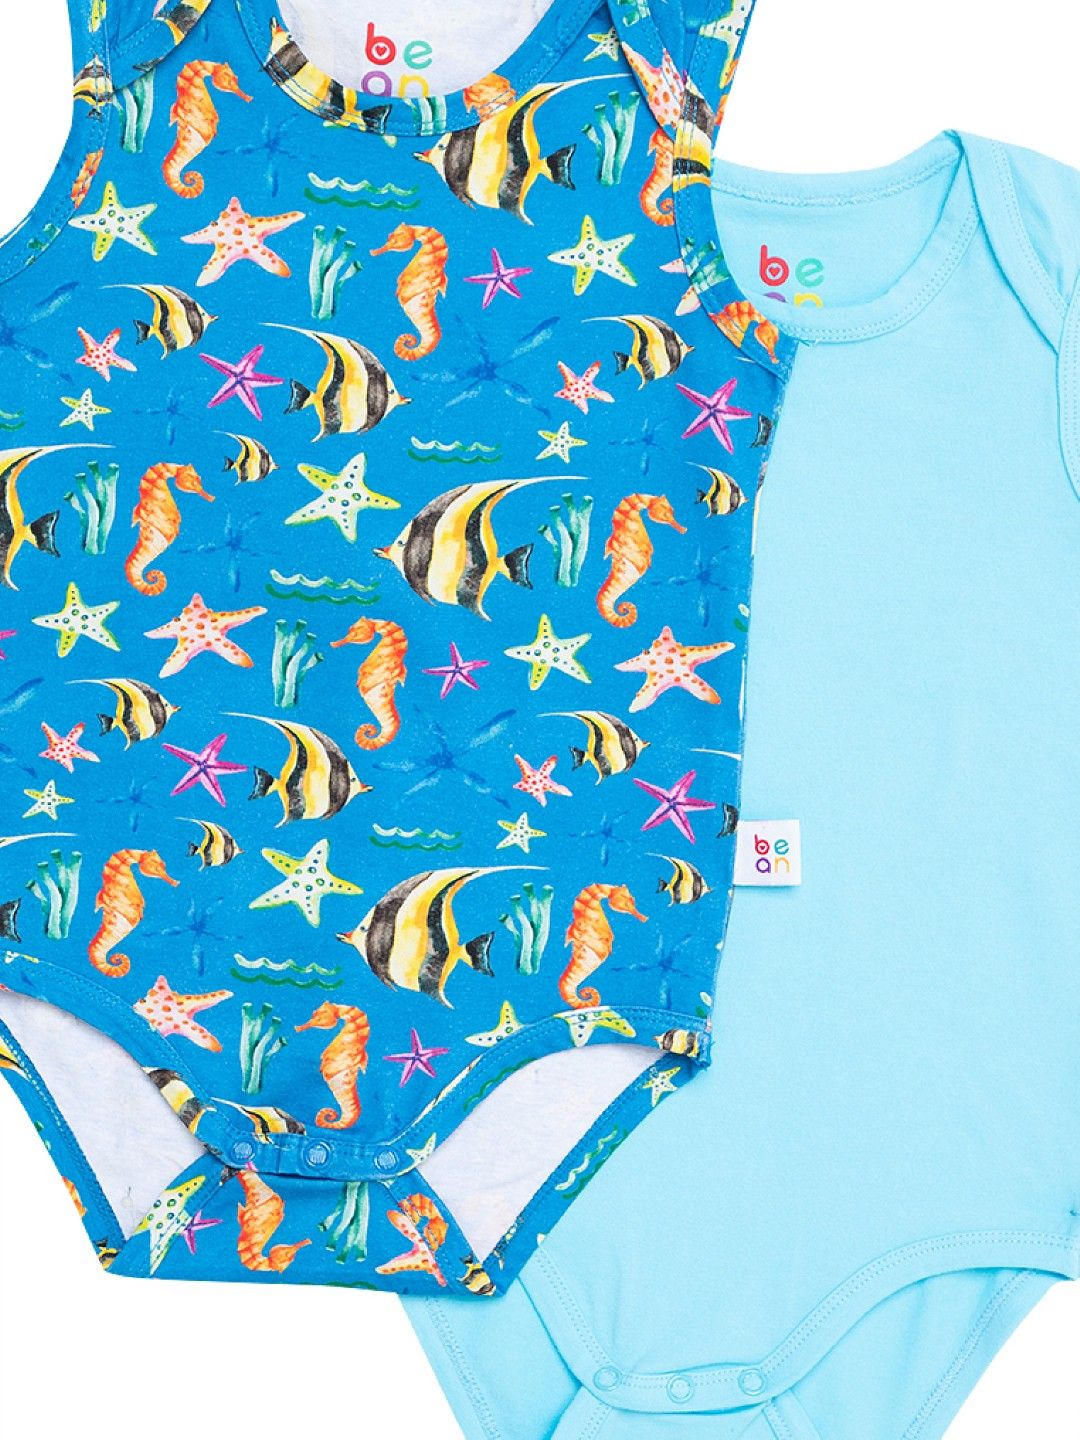 bean fashion Wonder Playsuits 2-Piece Anina Rubio Starfish Nasugbu Sleeveless Onesie Set (Multicolor- Image 3)